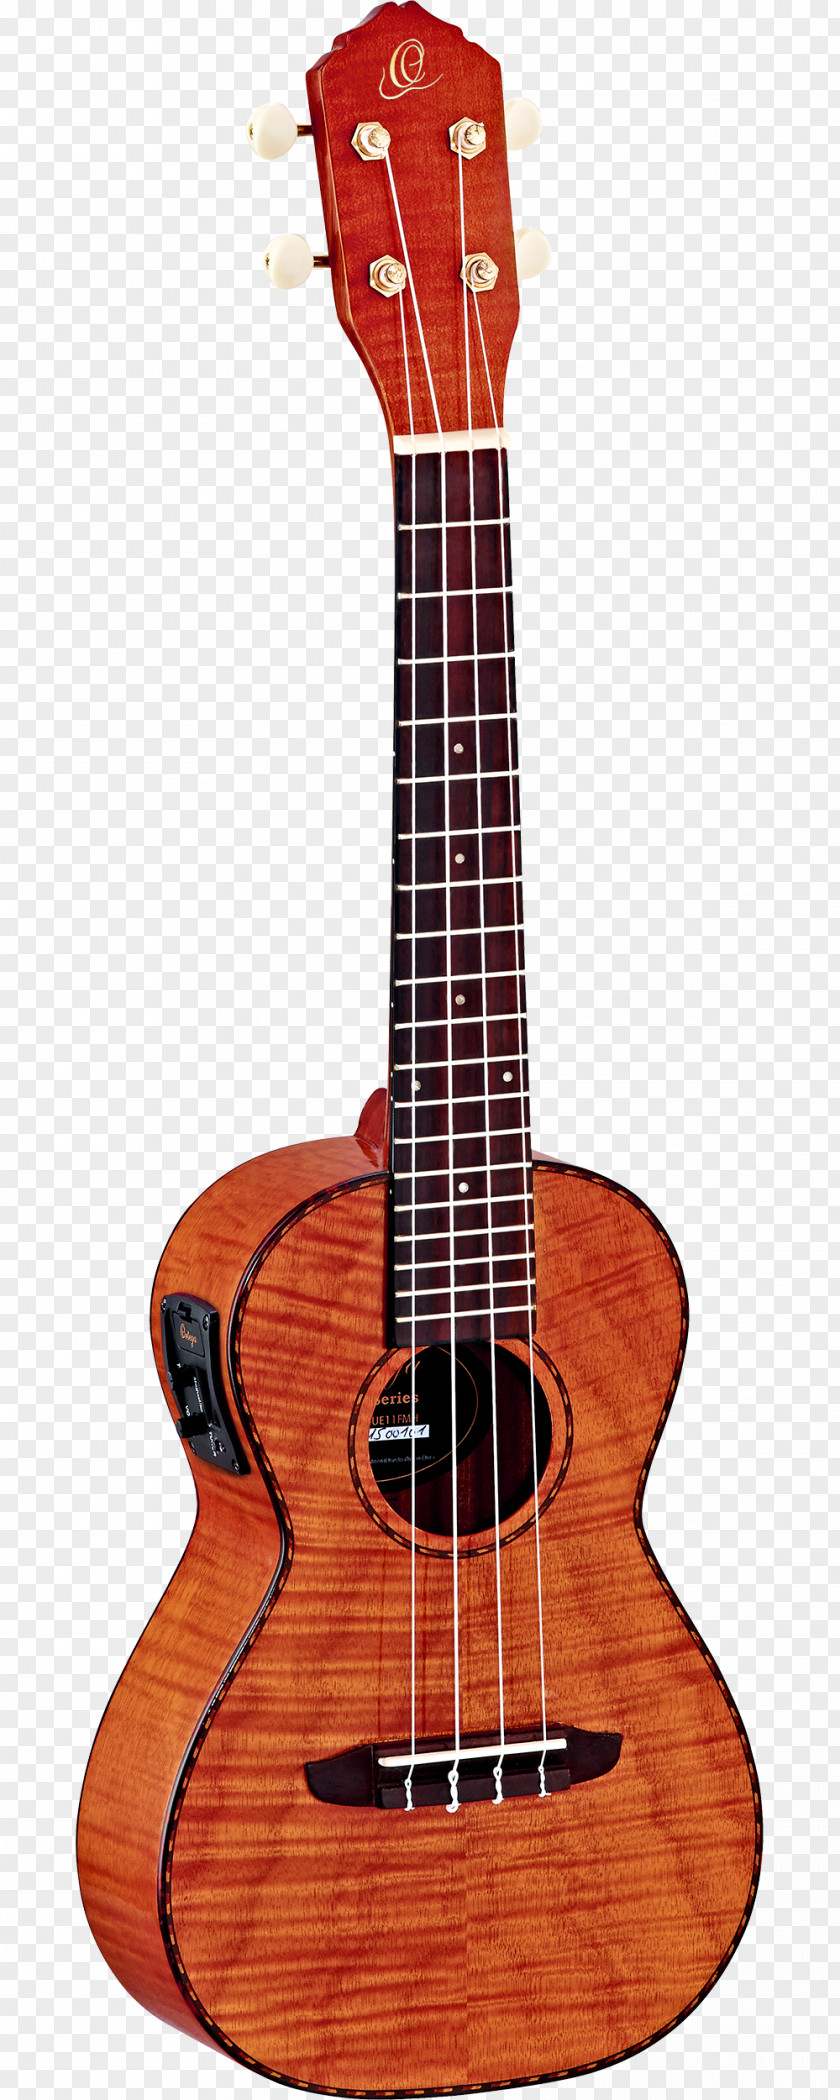 Amancio Ortega Ukulele Guitar Amplifier Soprano Musical Instruments PNG